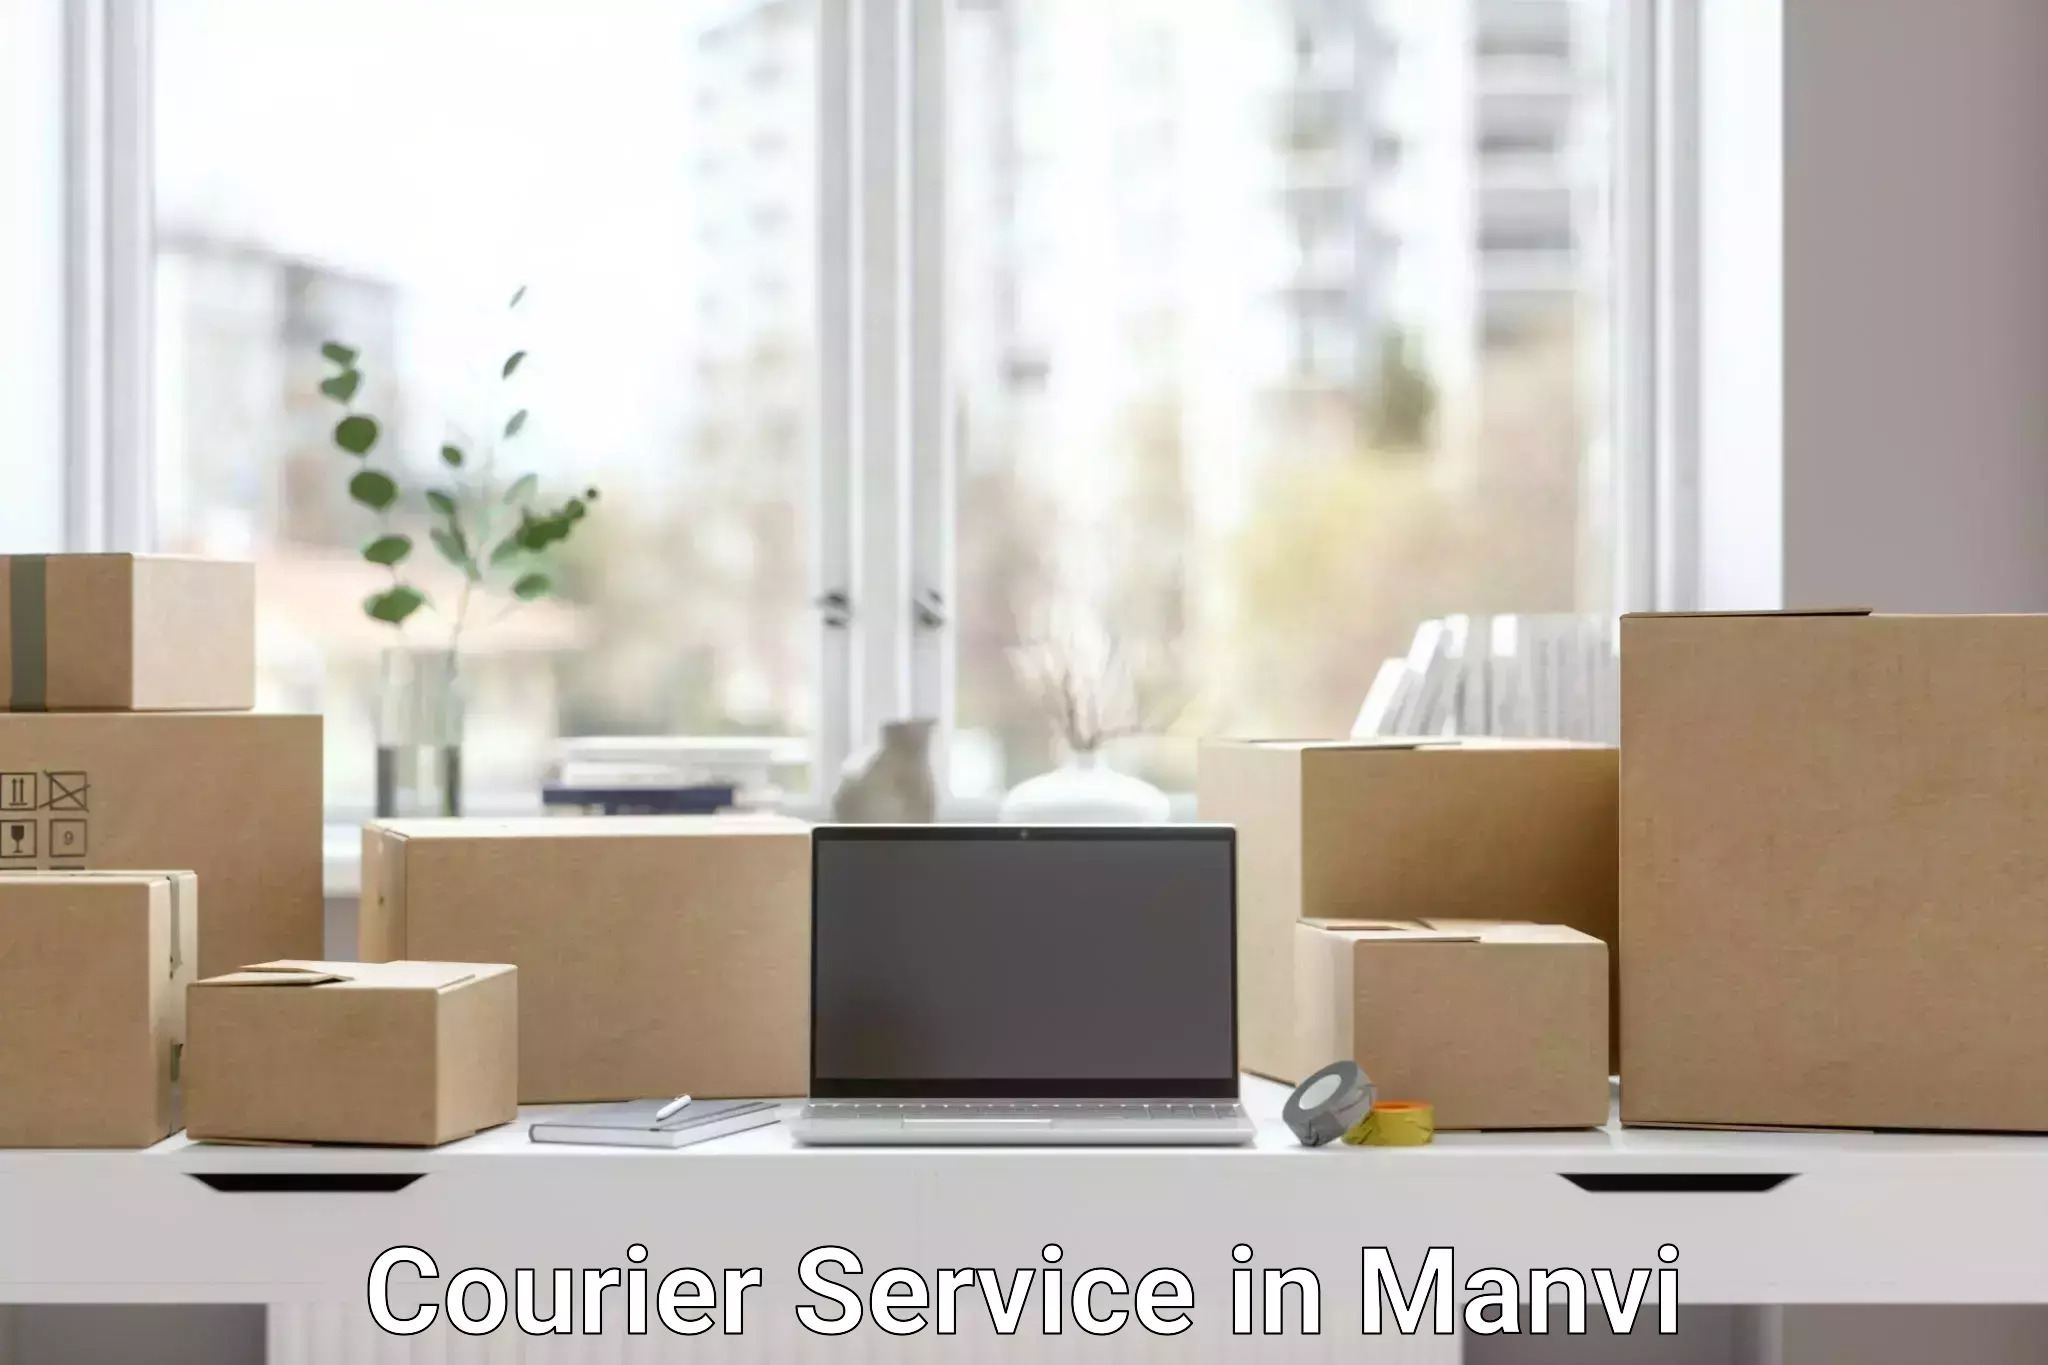 Express package handling in Manvi